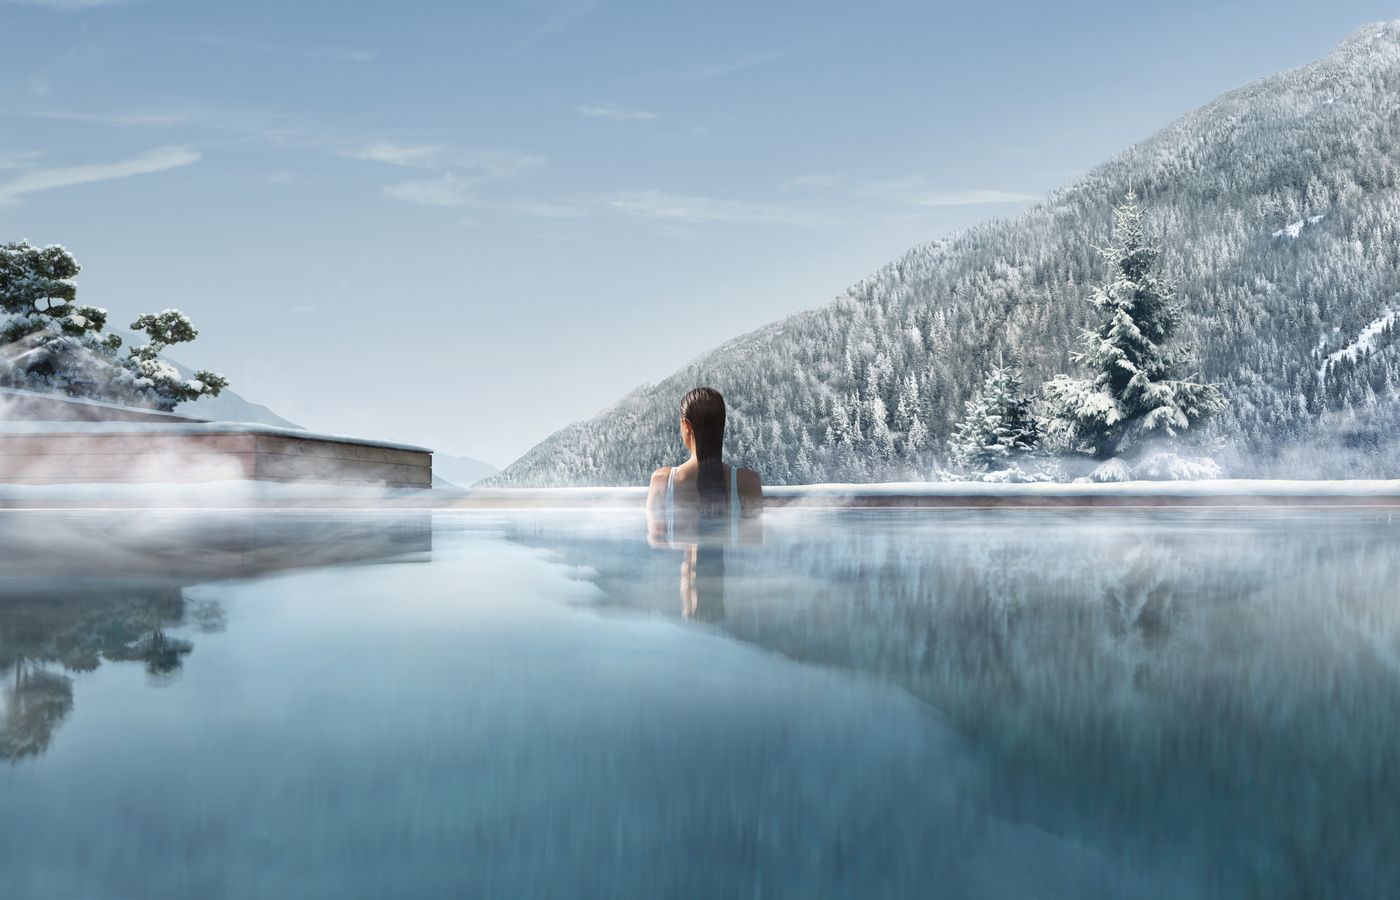 Trip Fit - FitReisen - Lefay Resort & Spa Dolomiti in Pinzolo buche jetzt Deinen Wellness & Beauty Urlaub im Lefay Resort & Spa Dolomiti in der Region Südtirol, in Italien günstig bei uns!